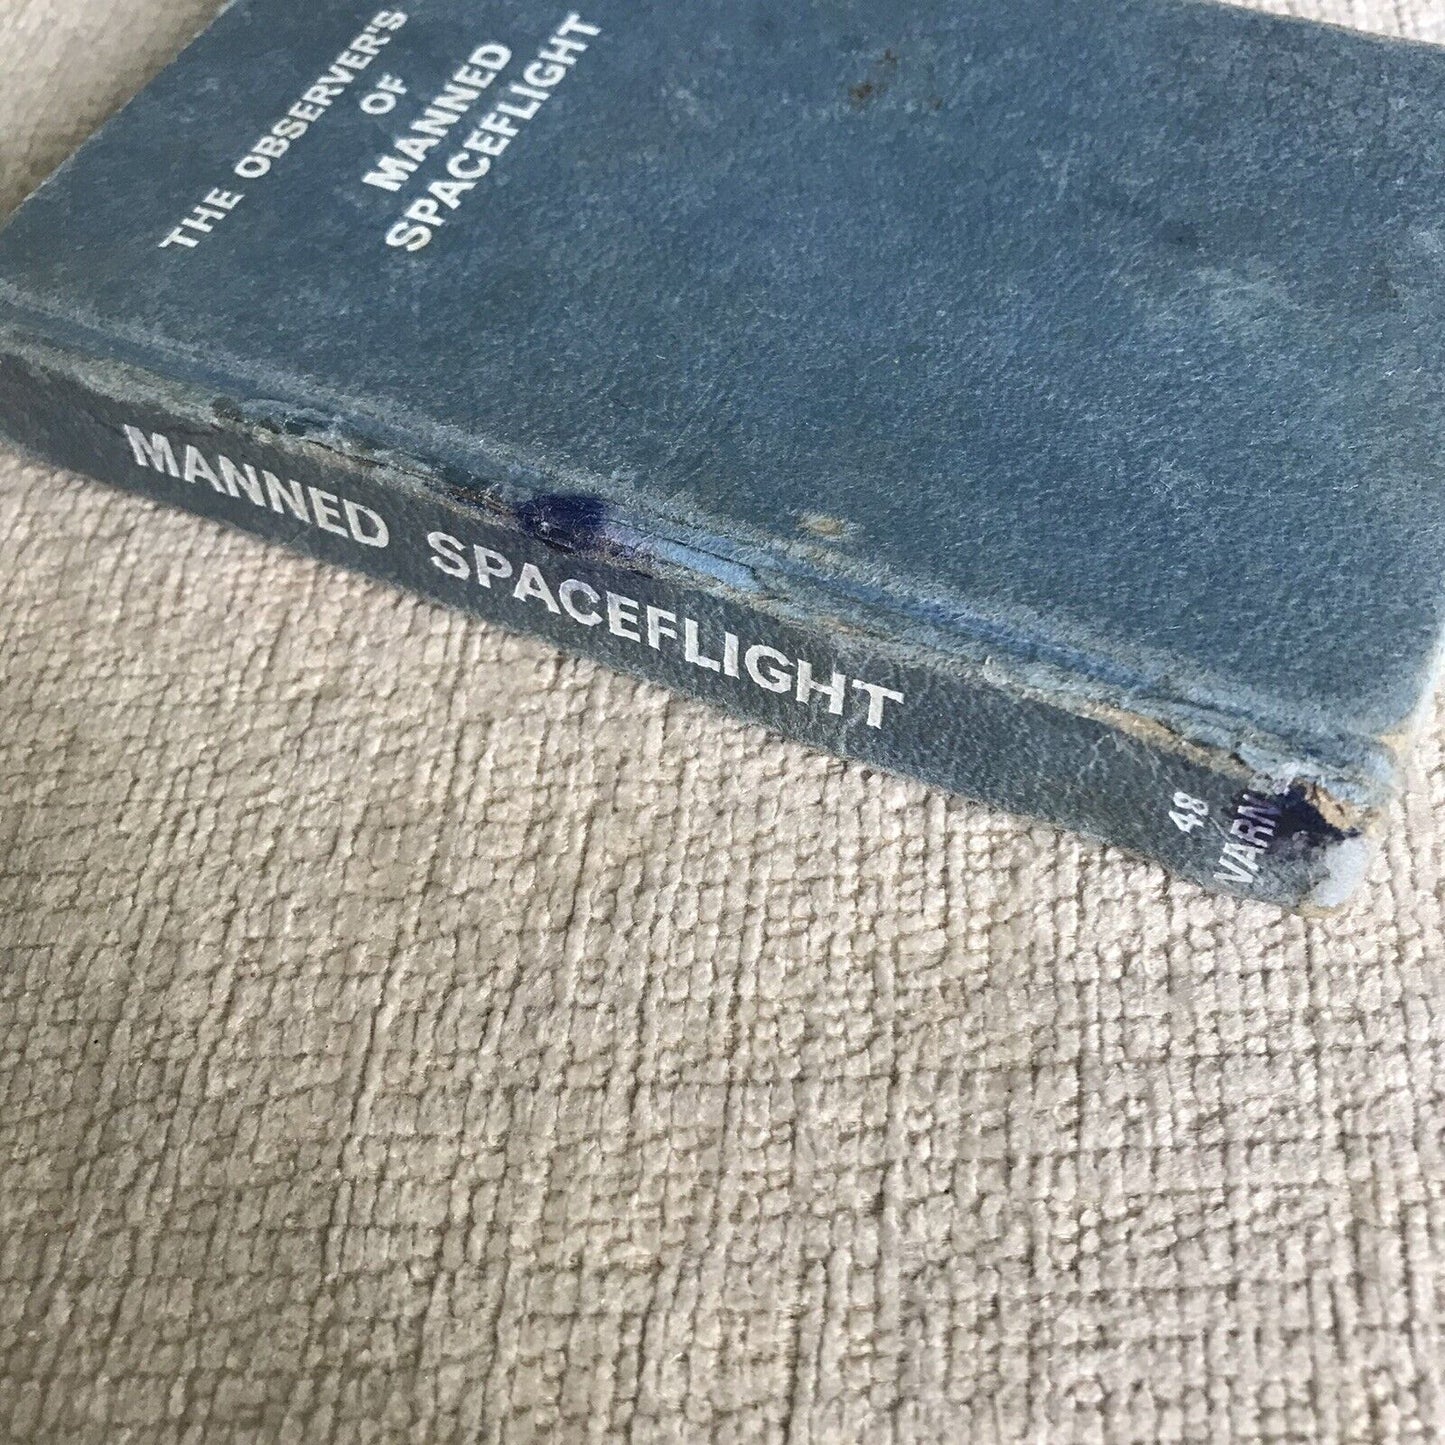 1972*1.*Observer's Book of Manned Space Flight von Reginald Turnill